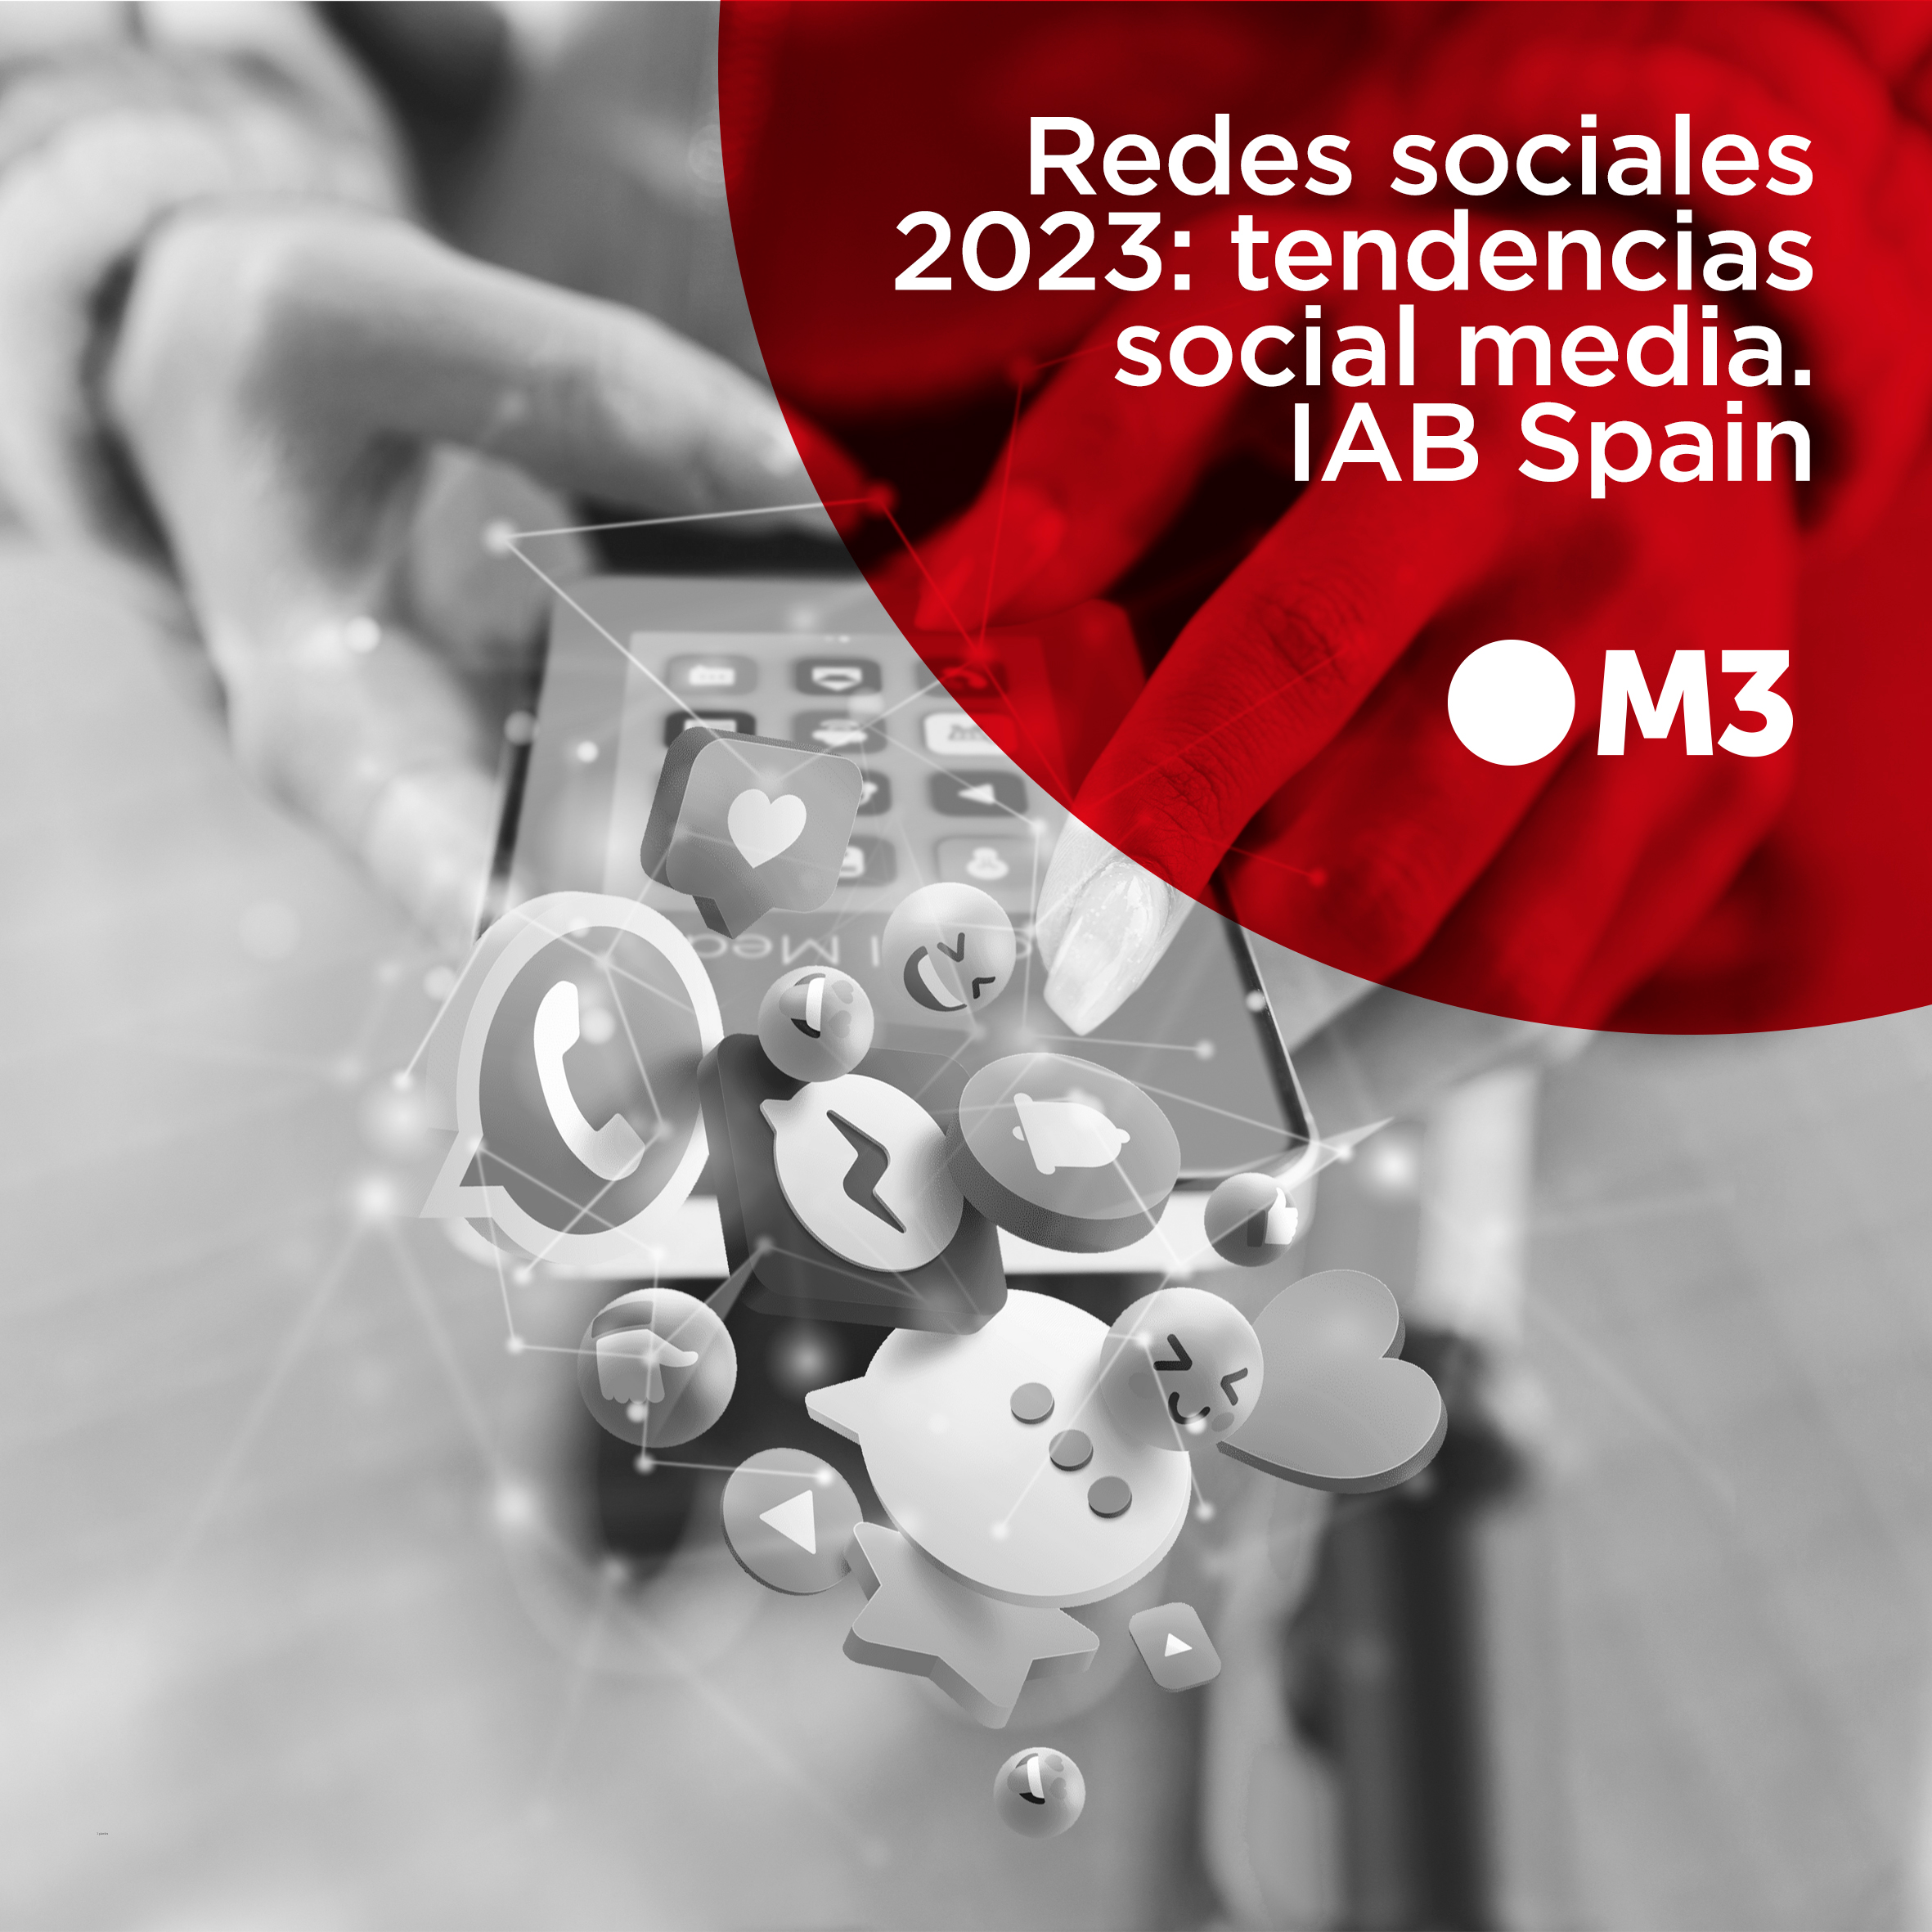 Redes sociales 2023: tendencias social media, IAB Spain